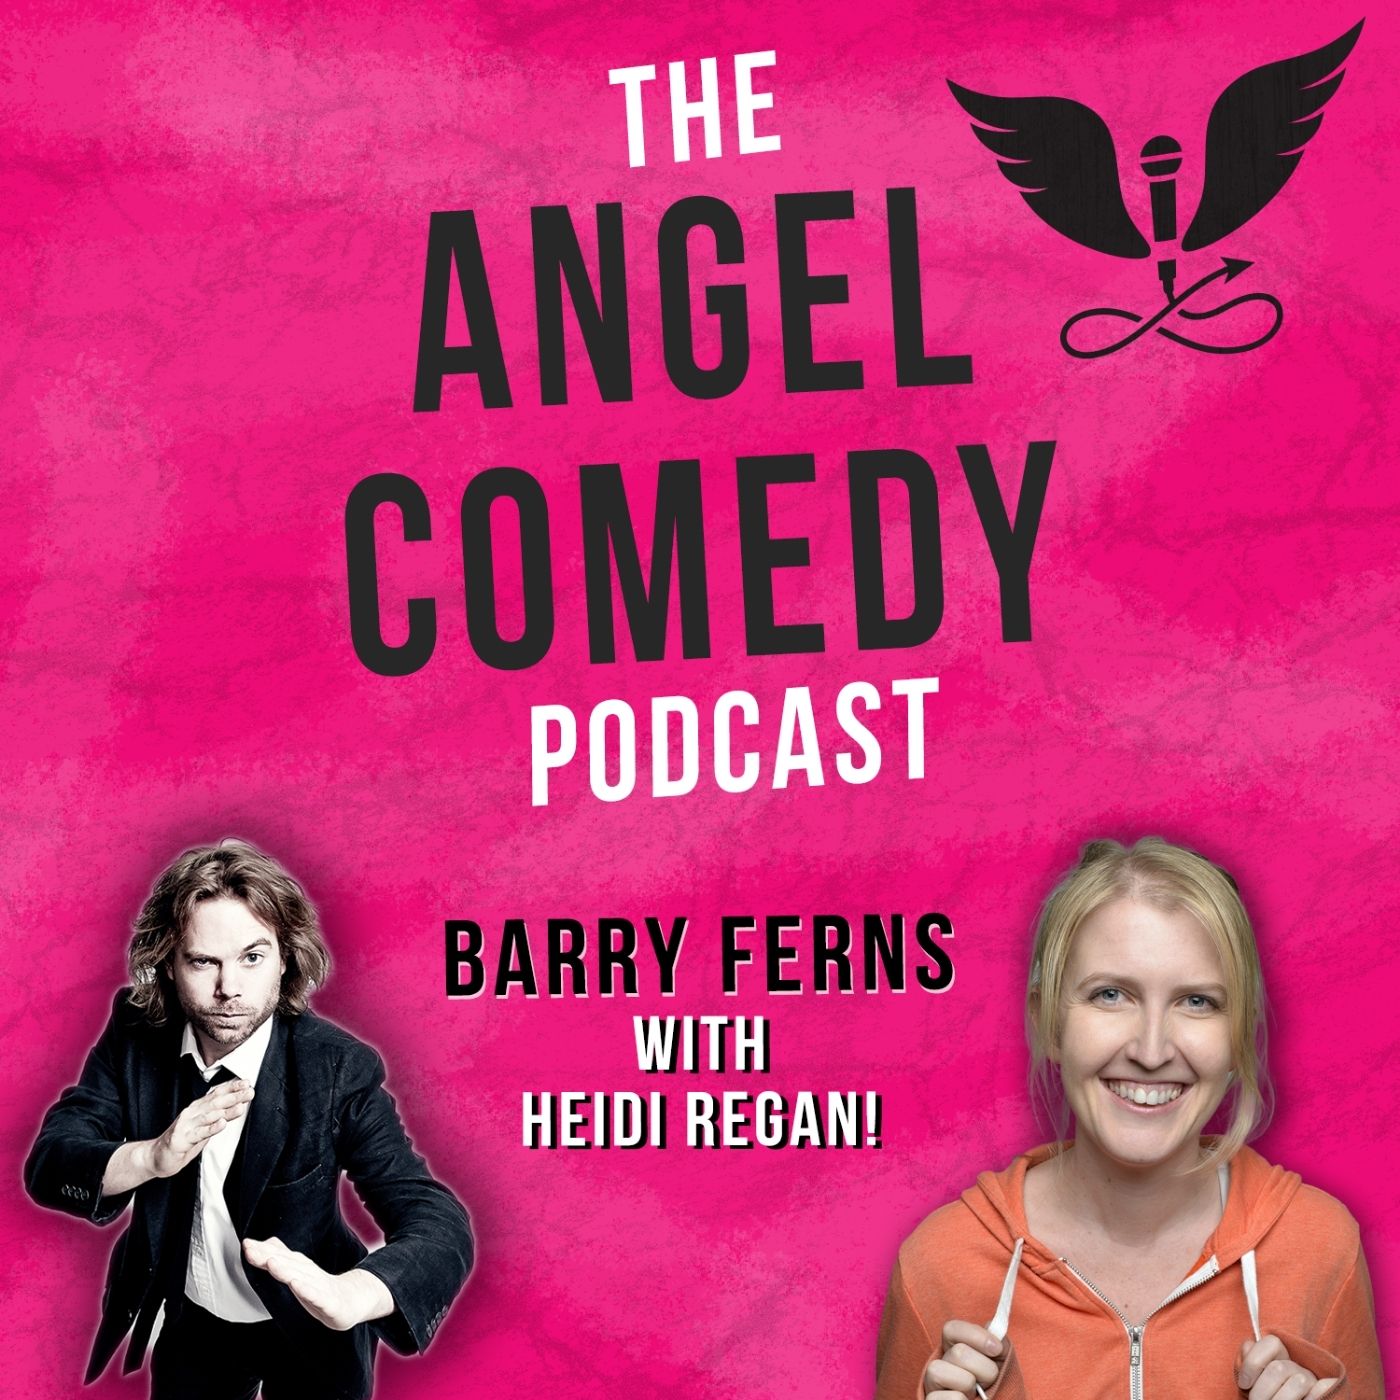 The Angel Comedy Podcast with Heidi Regan